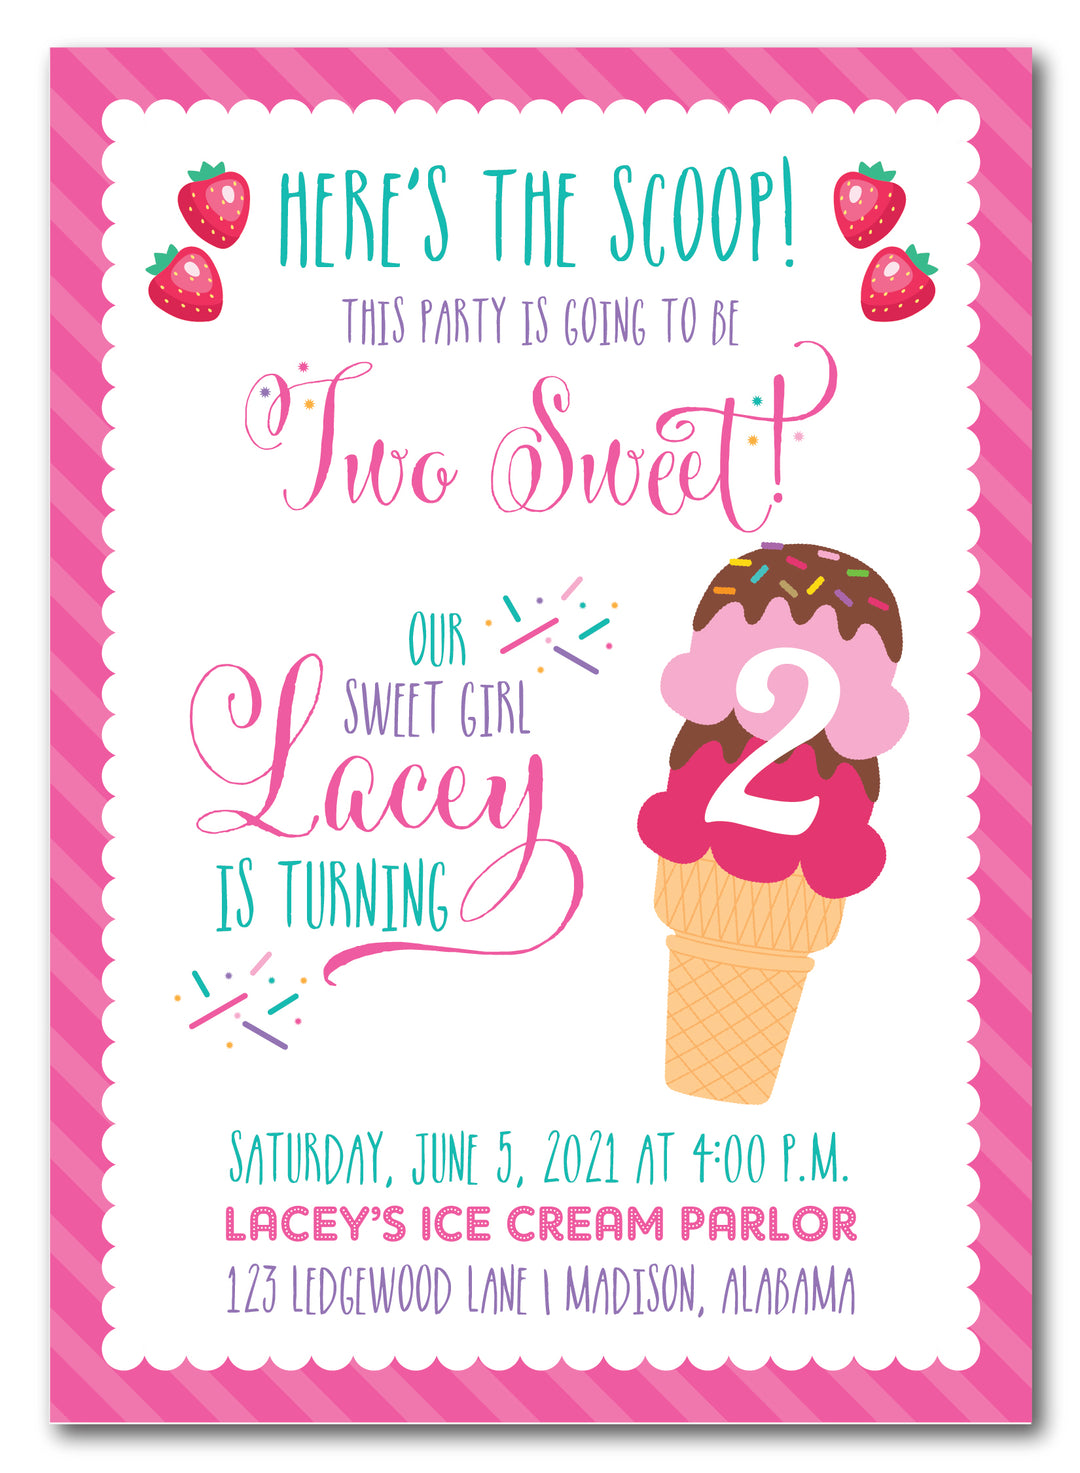 The Ice Cream V Birthday Party Invitation